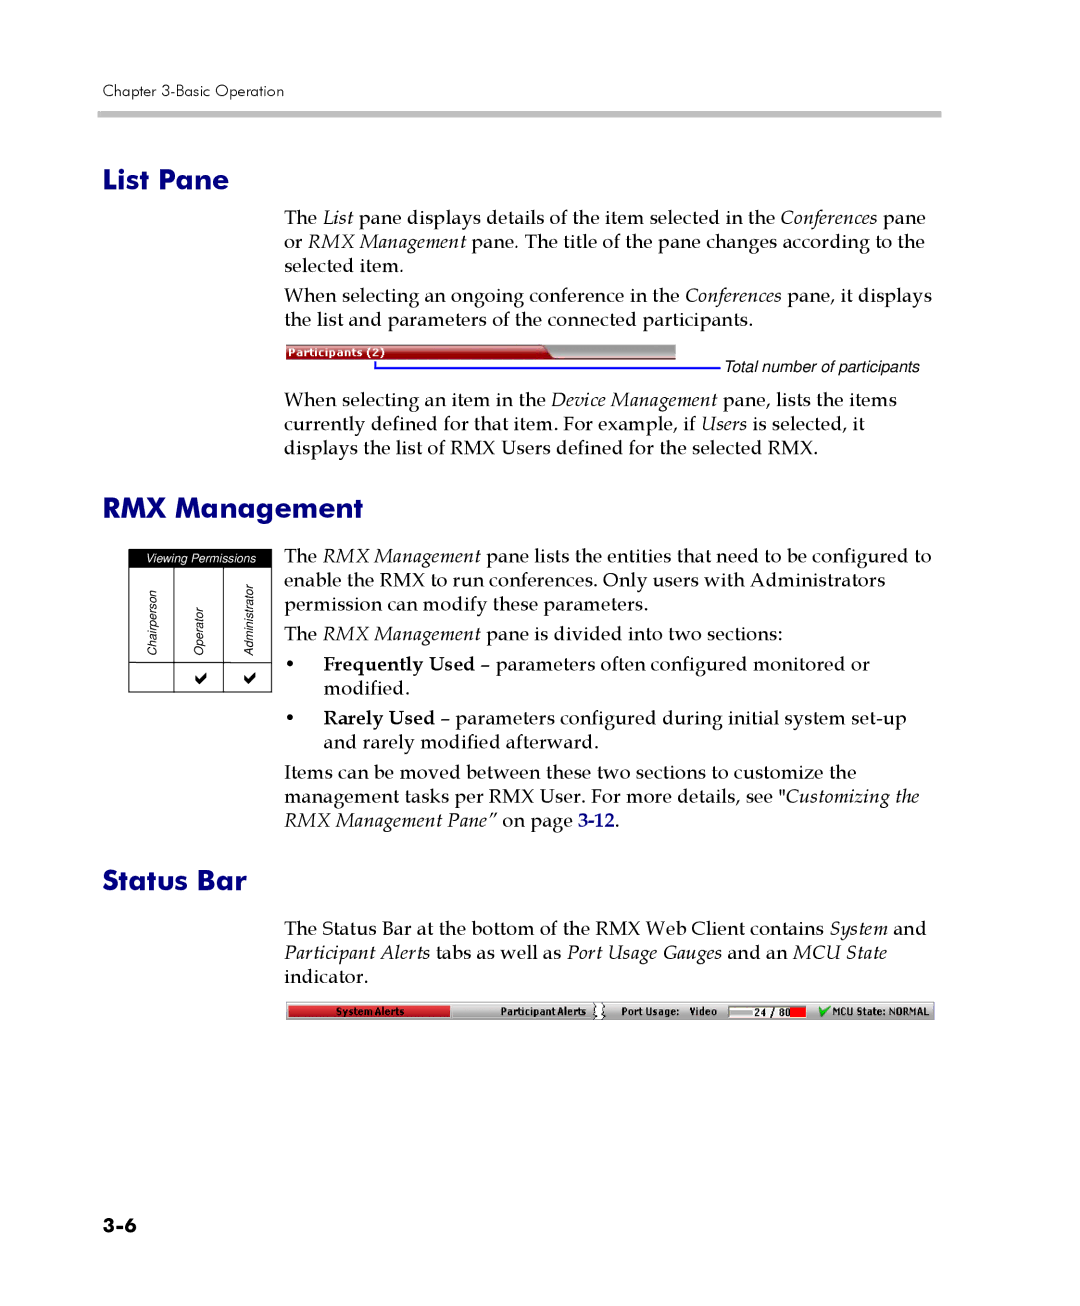 Polycom DOC2560C manual List Pane, RMX Management, Status Bar 